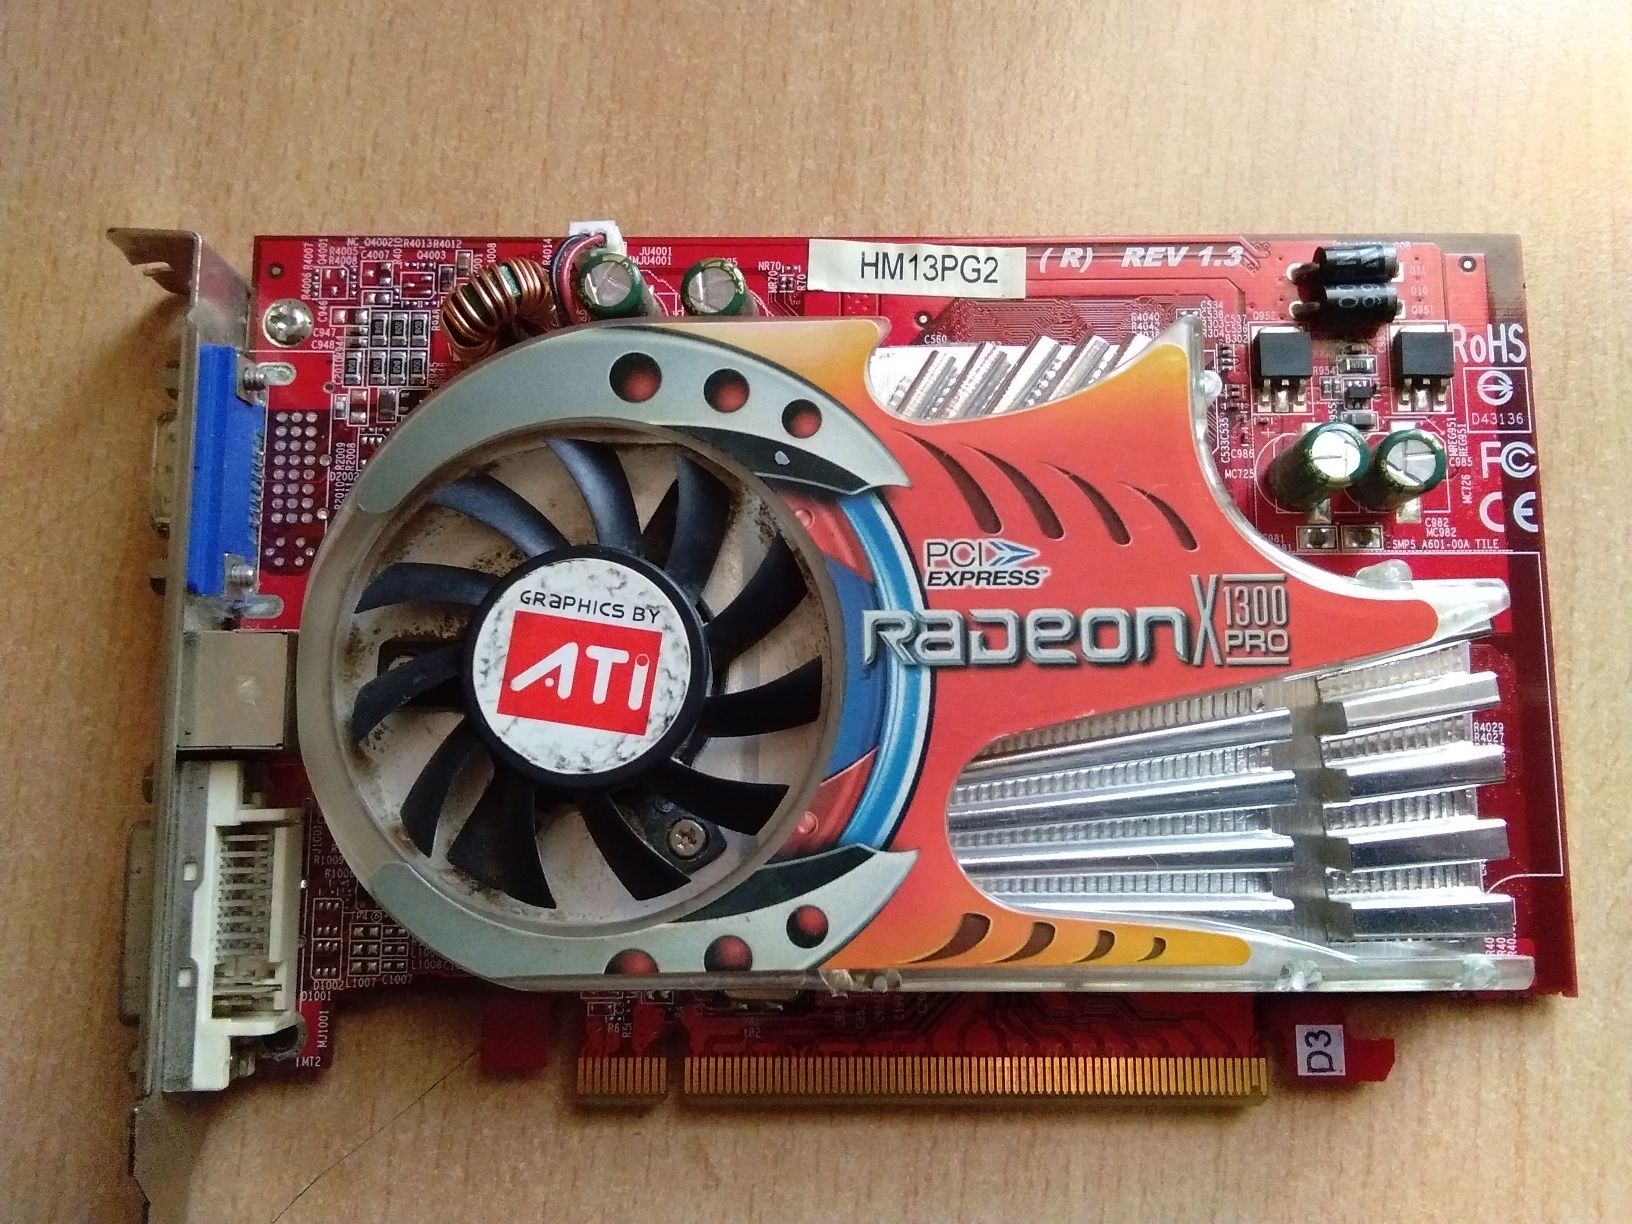 Radeon x 1300pro 512mb